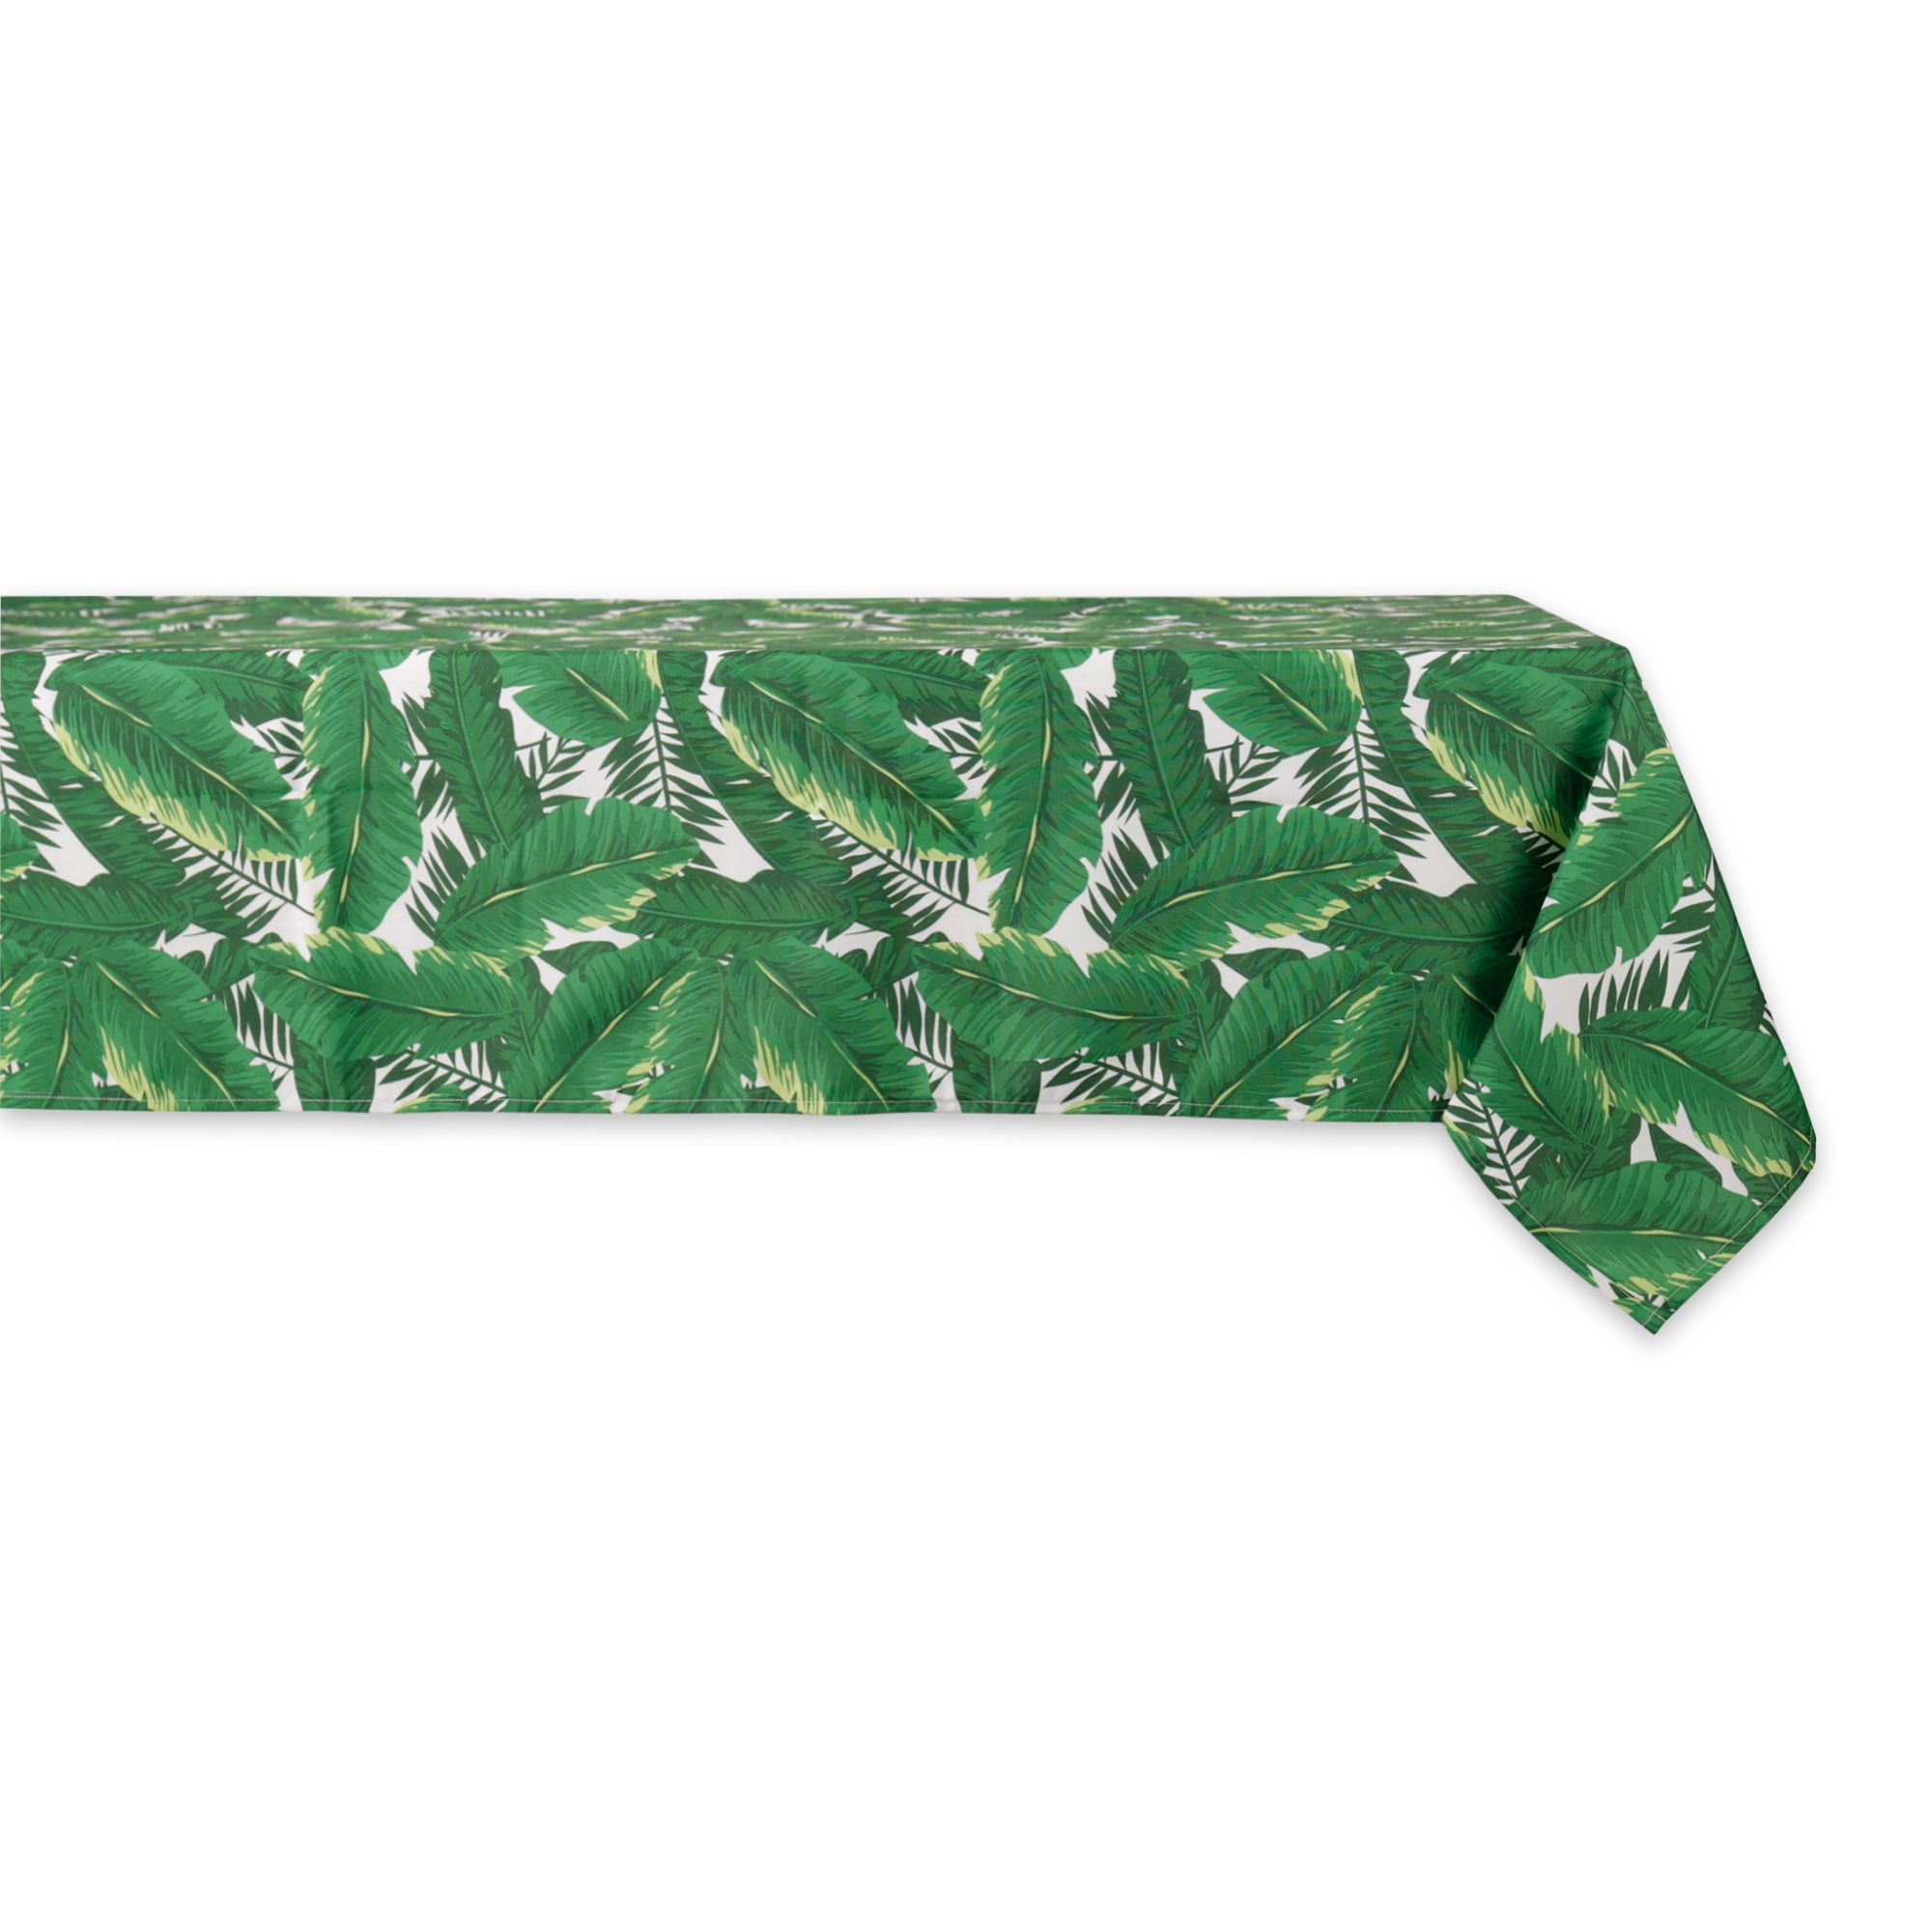 DII Banana Leaf Outdoor Tablecloth, 60x120